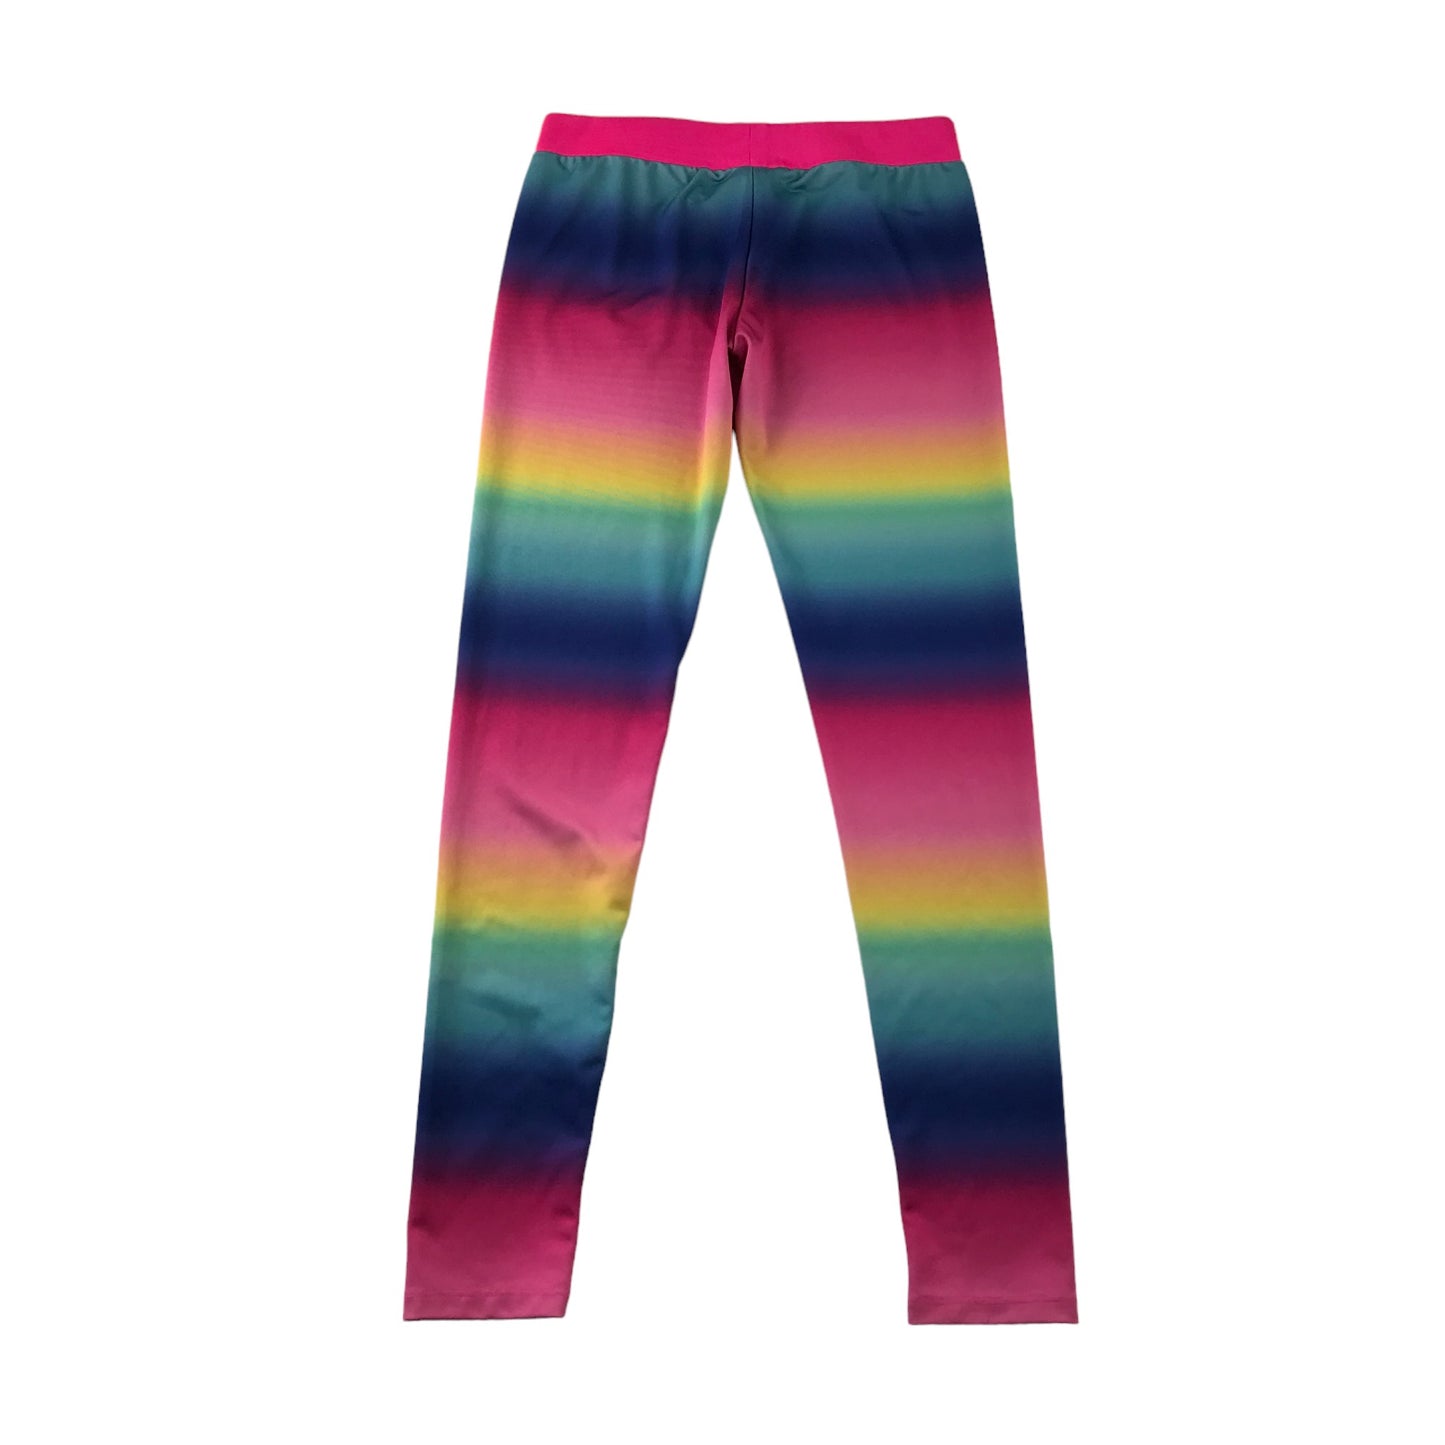 Tu Sport Leggings Age 9 Multicoloured Gradient Rainbow Style